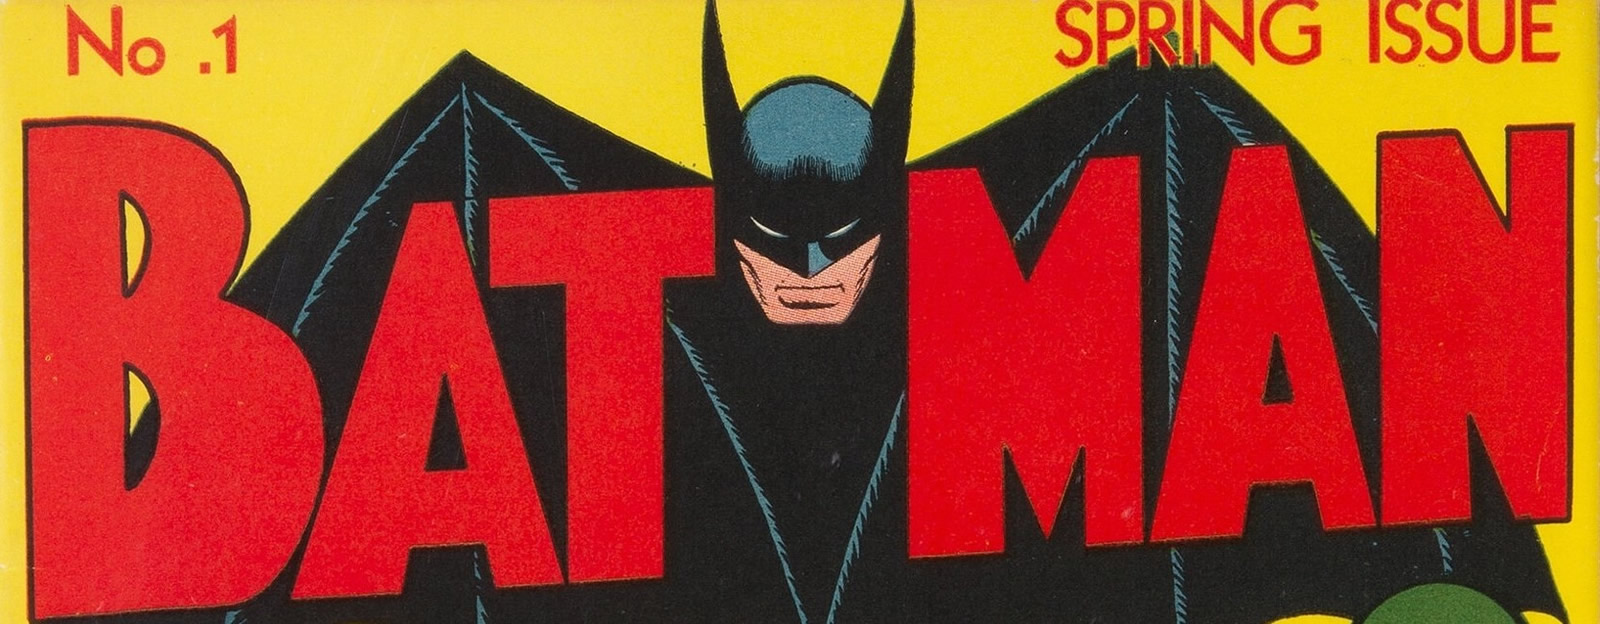 Batman Header Image